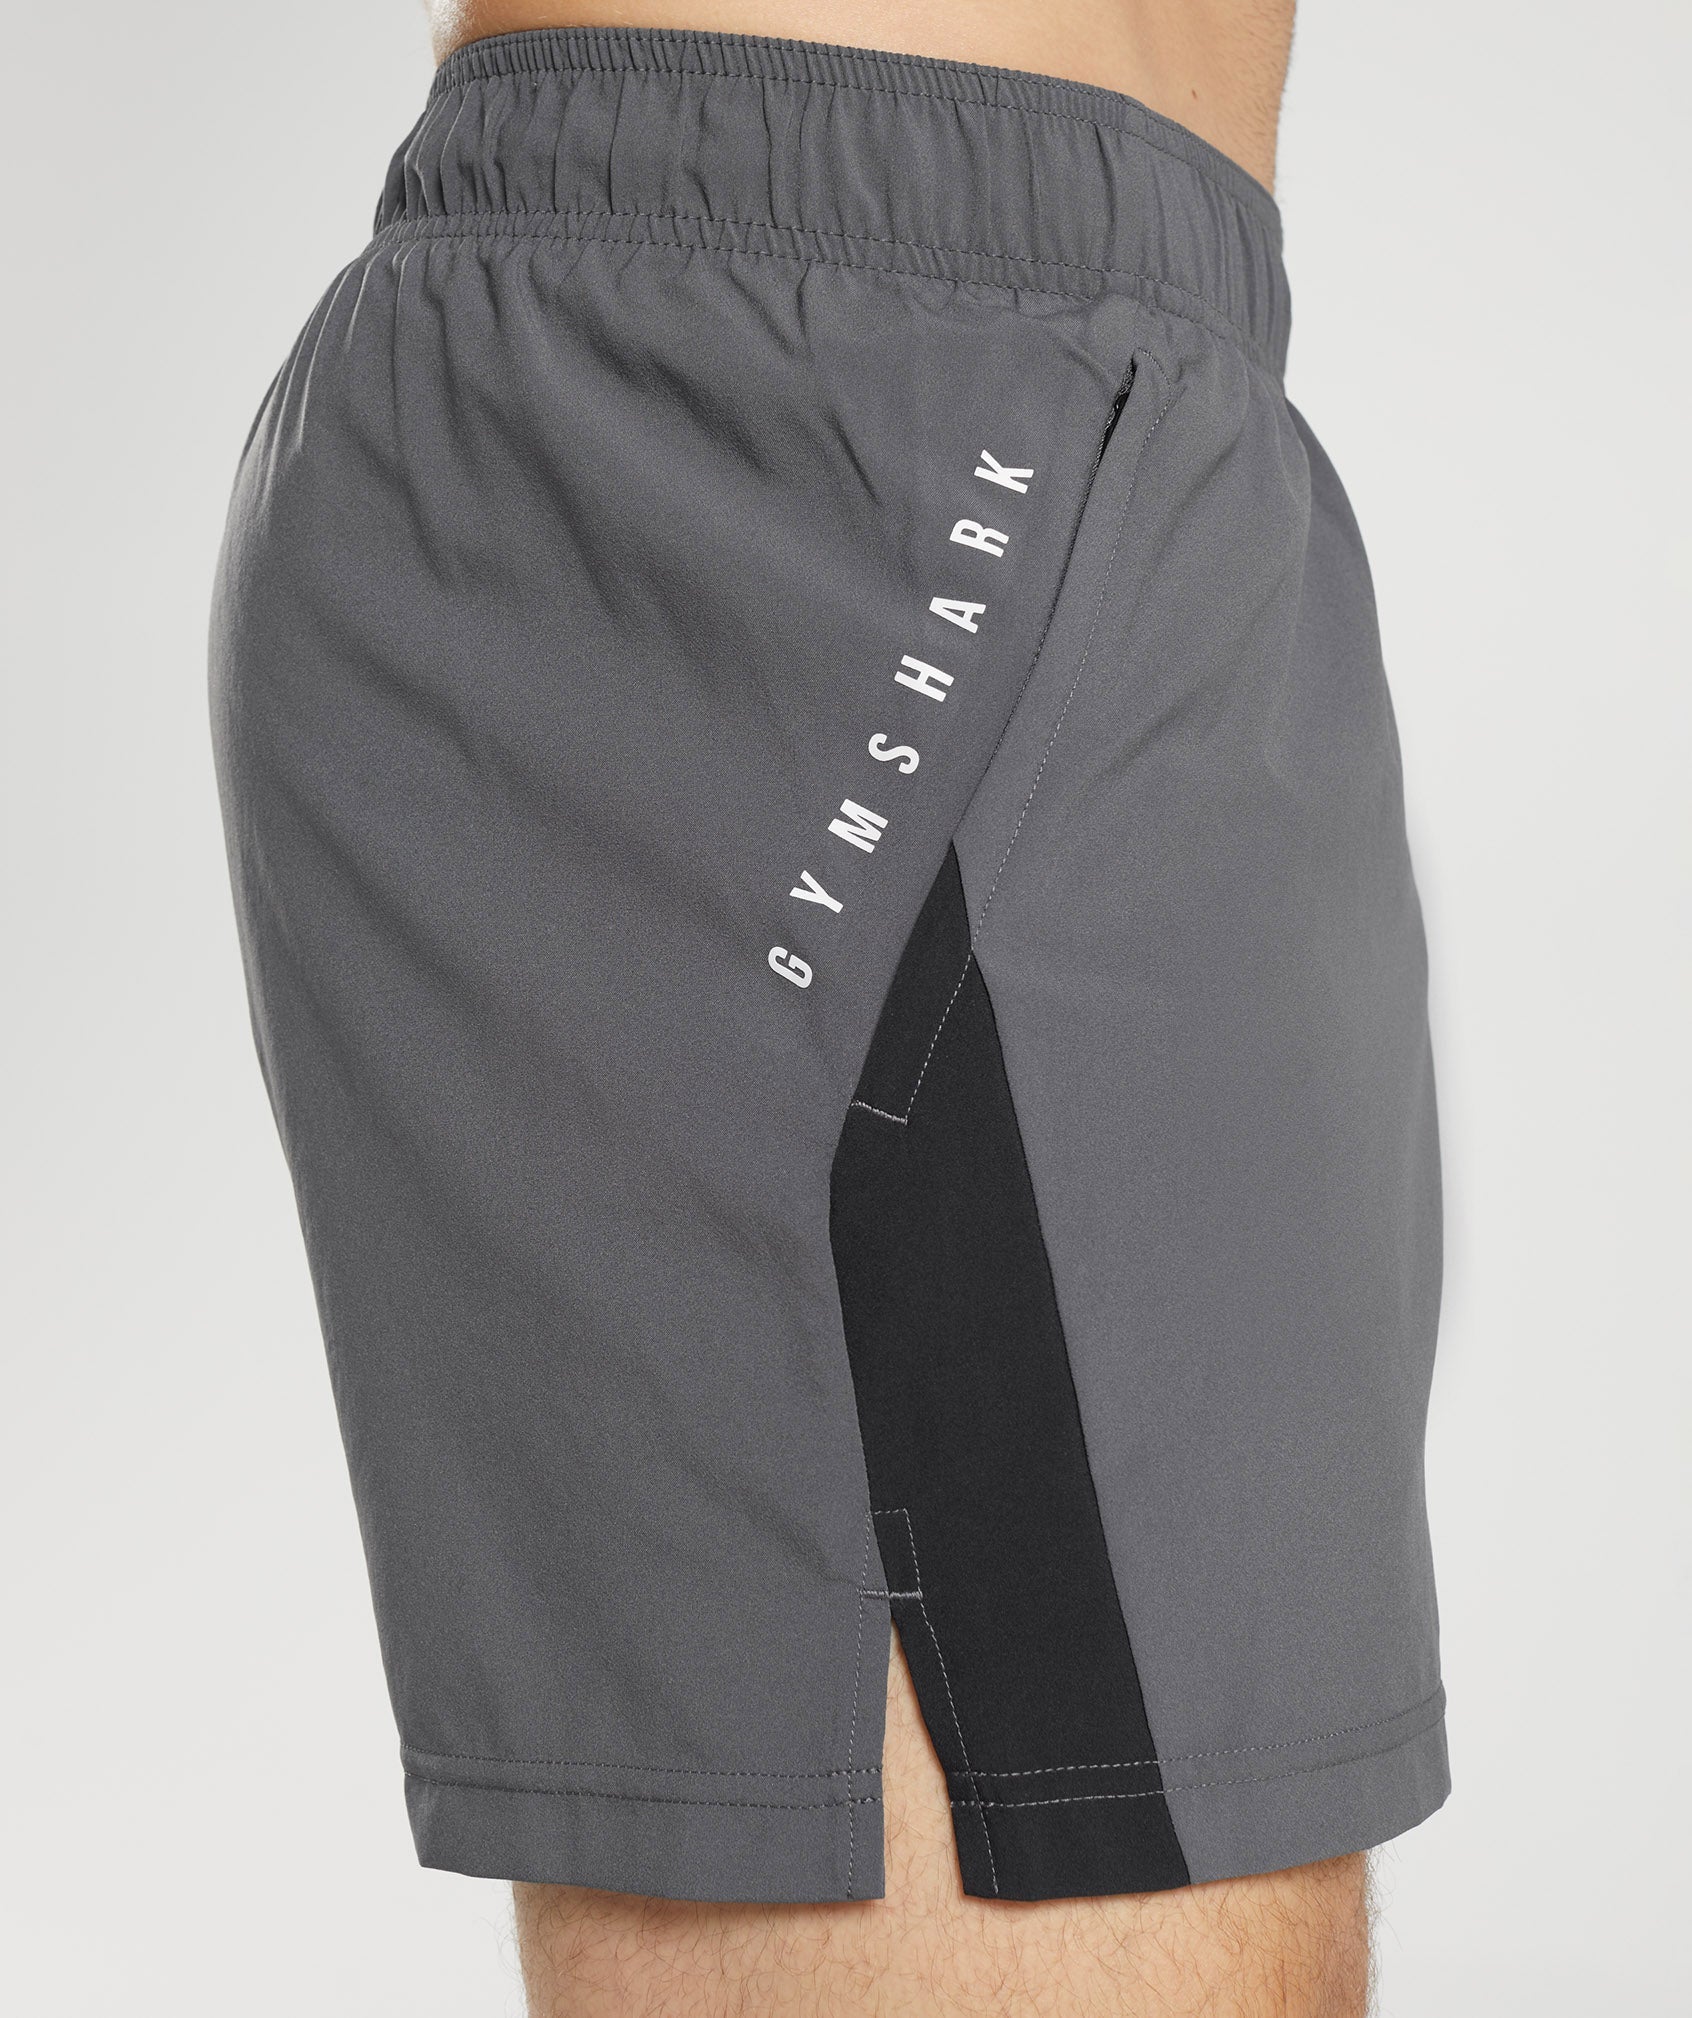 Sport 5" Shorts in Silhouette Grey/Black